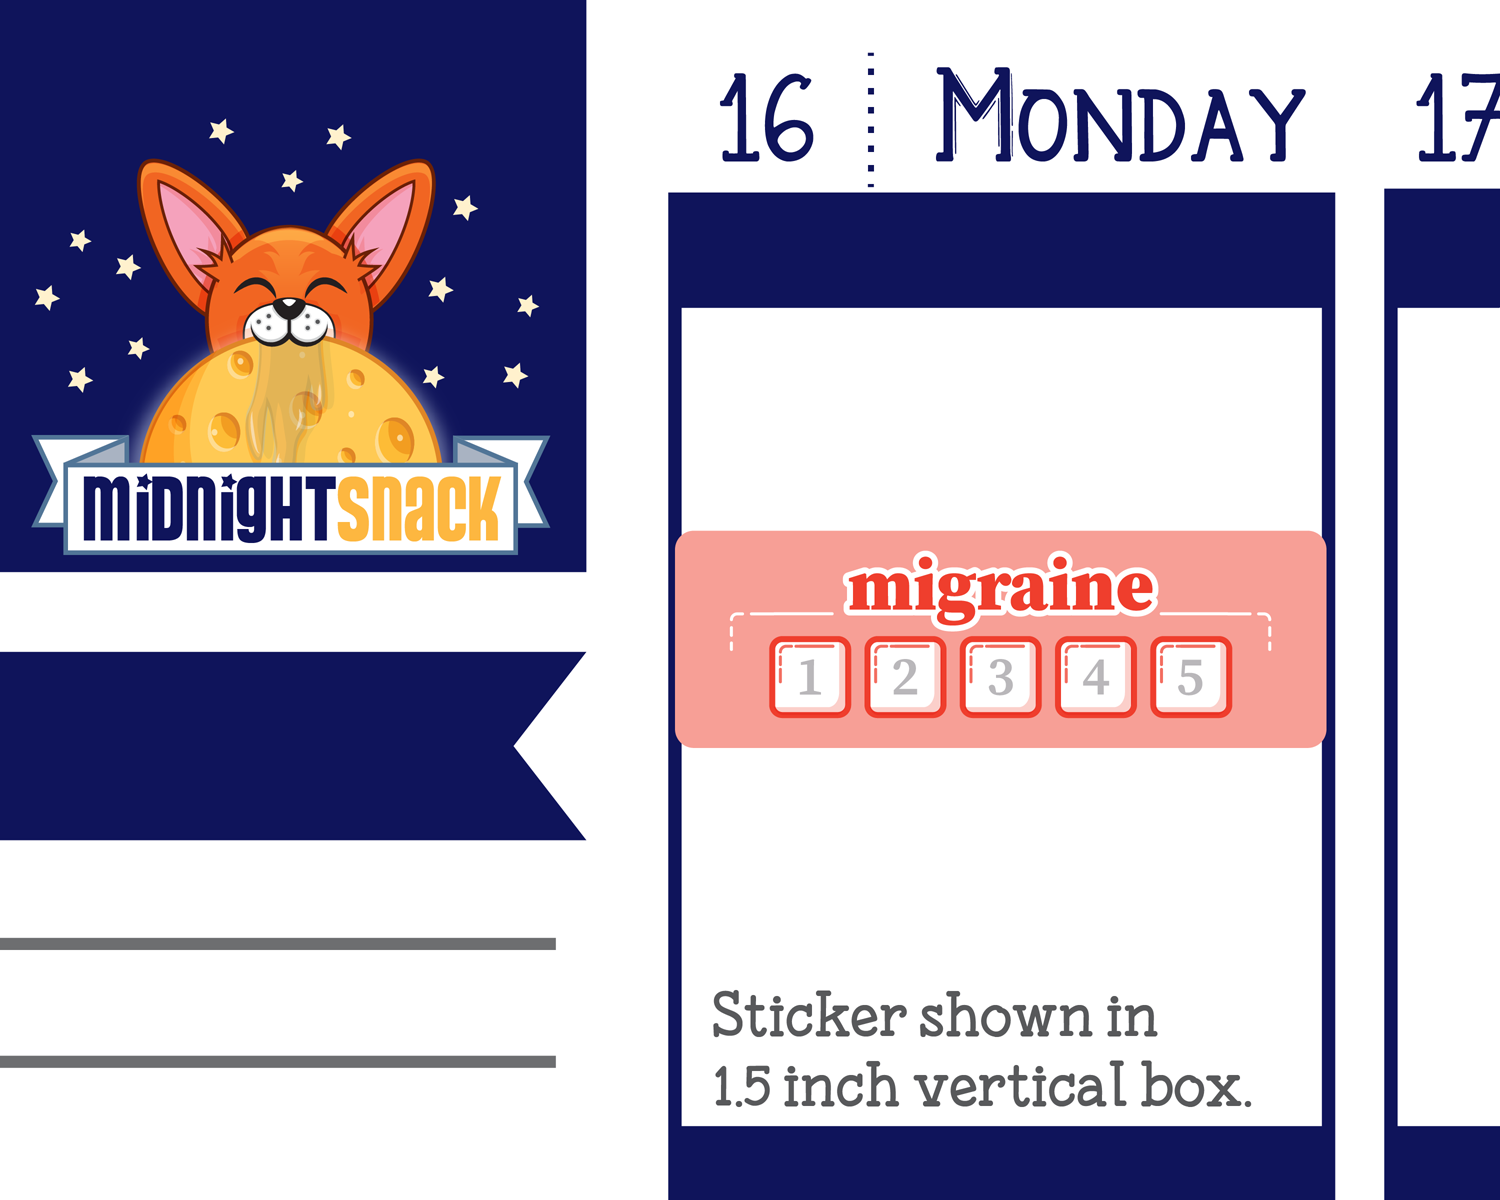 Migraine Tracker Planner Stickers: Migraine Scale 1-5